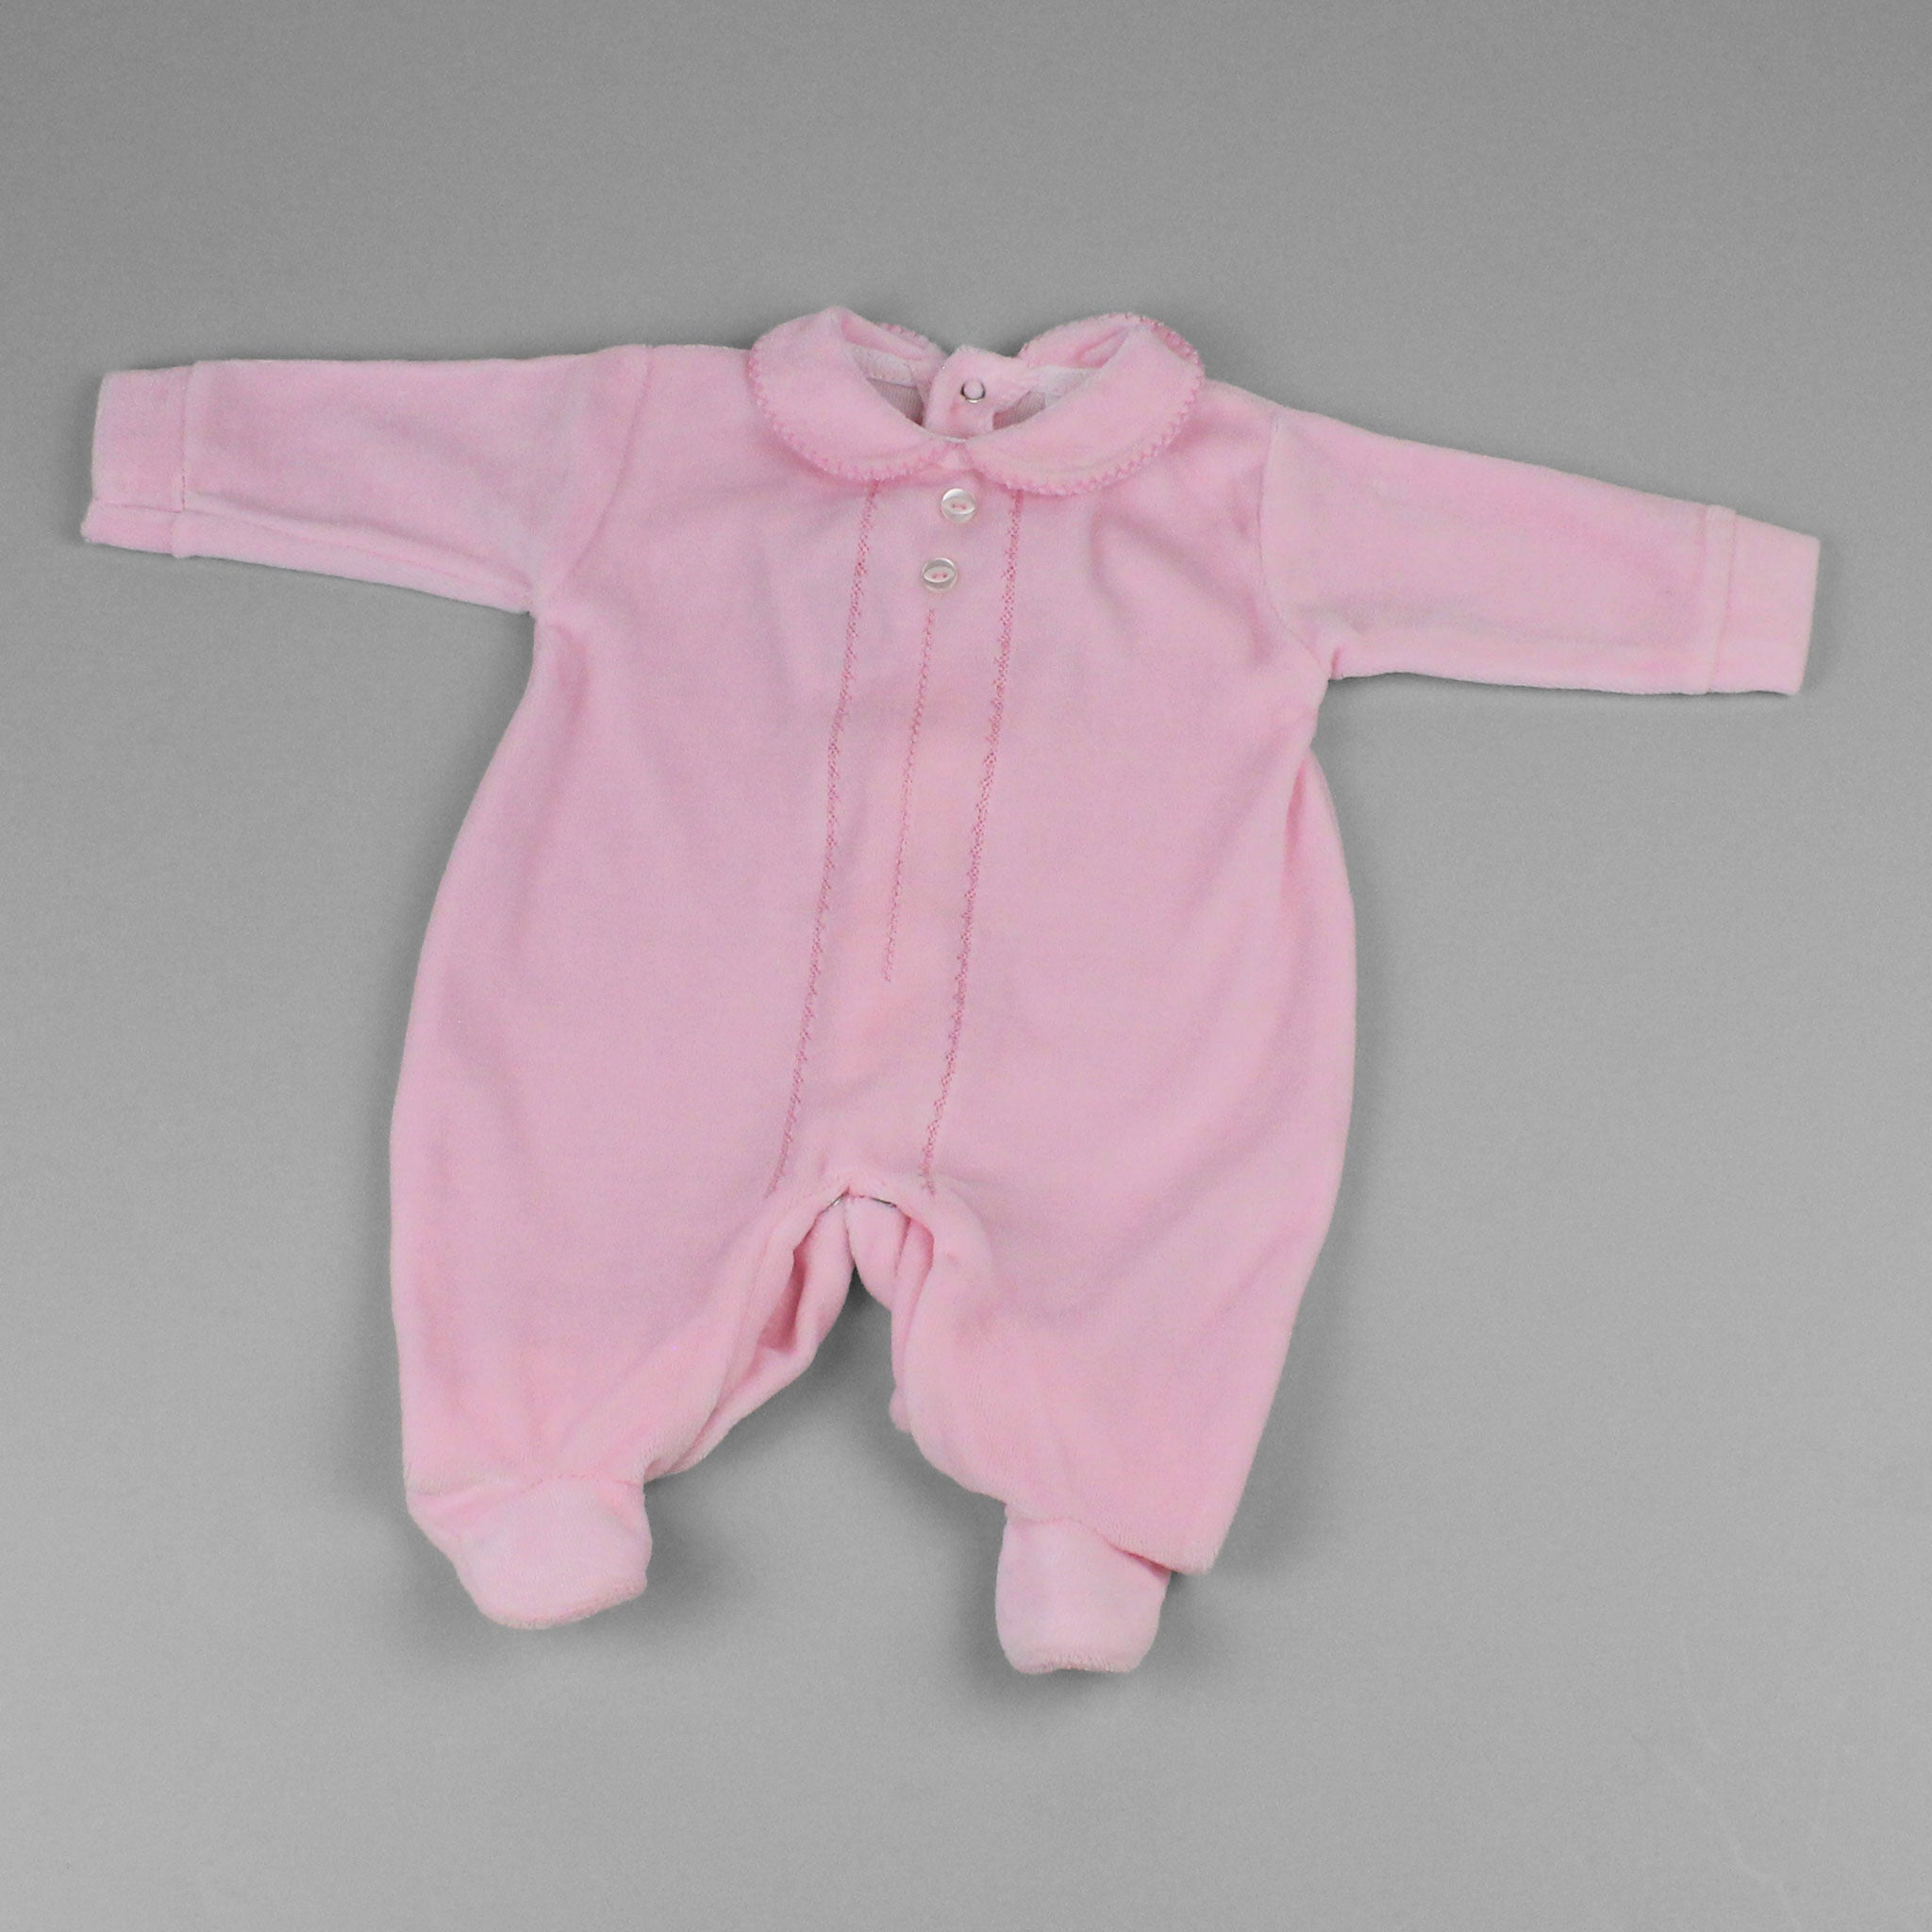 Pink baby velour sleepsuit pex